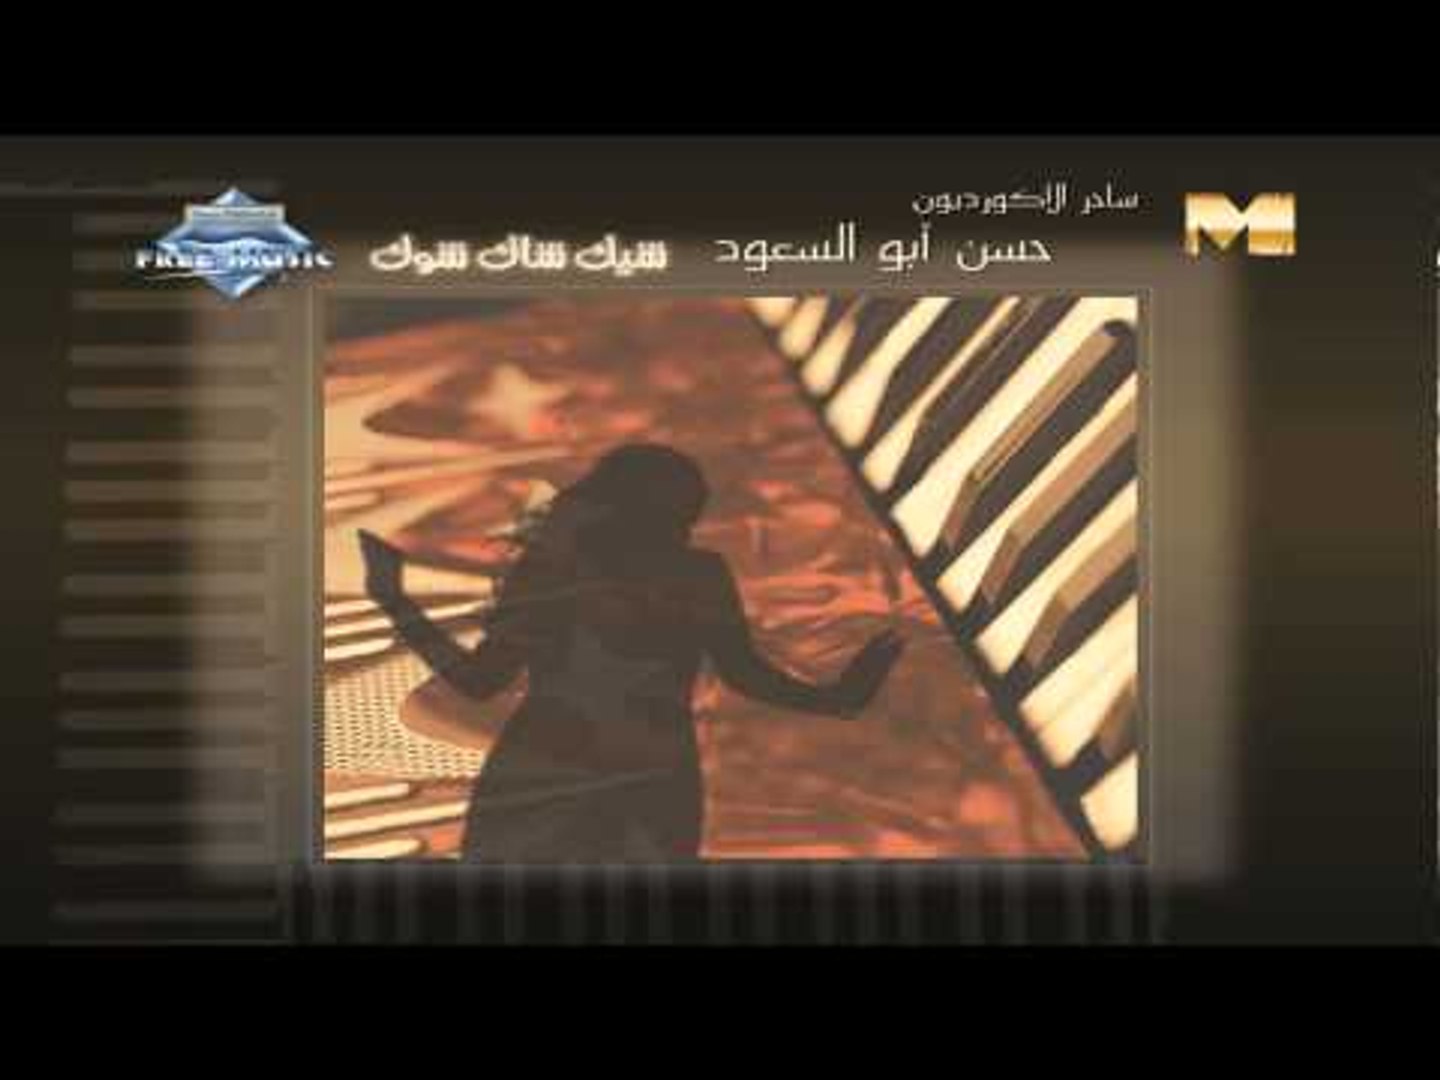 Hassan Abou El Seoud - Shek Shak Shok (Audio) | حسن أبوالسعود - شيك شاك شوك  - video Dailymotion